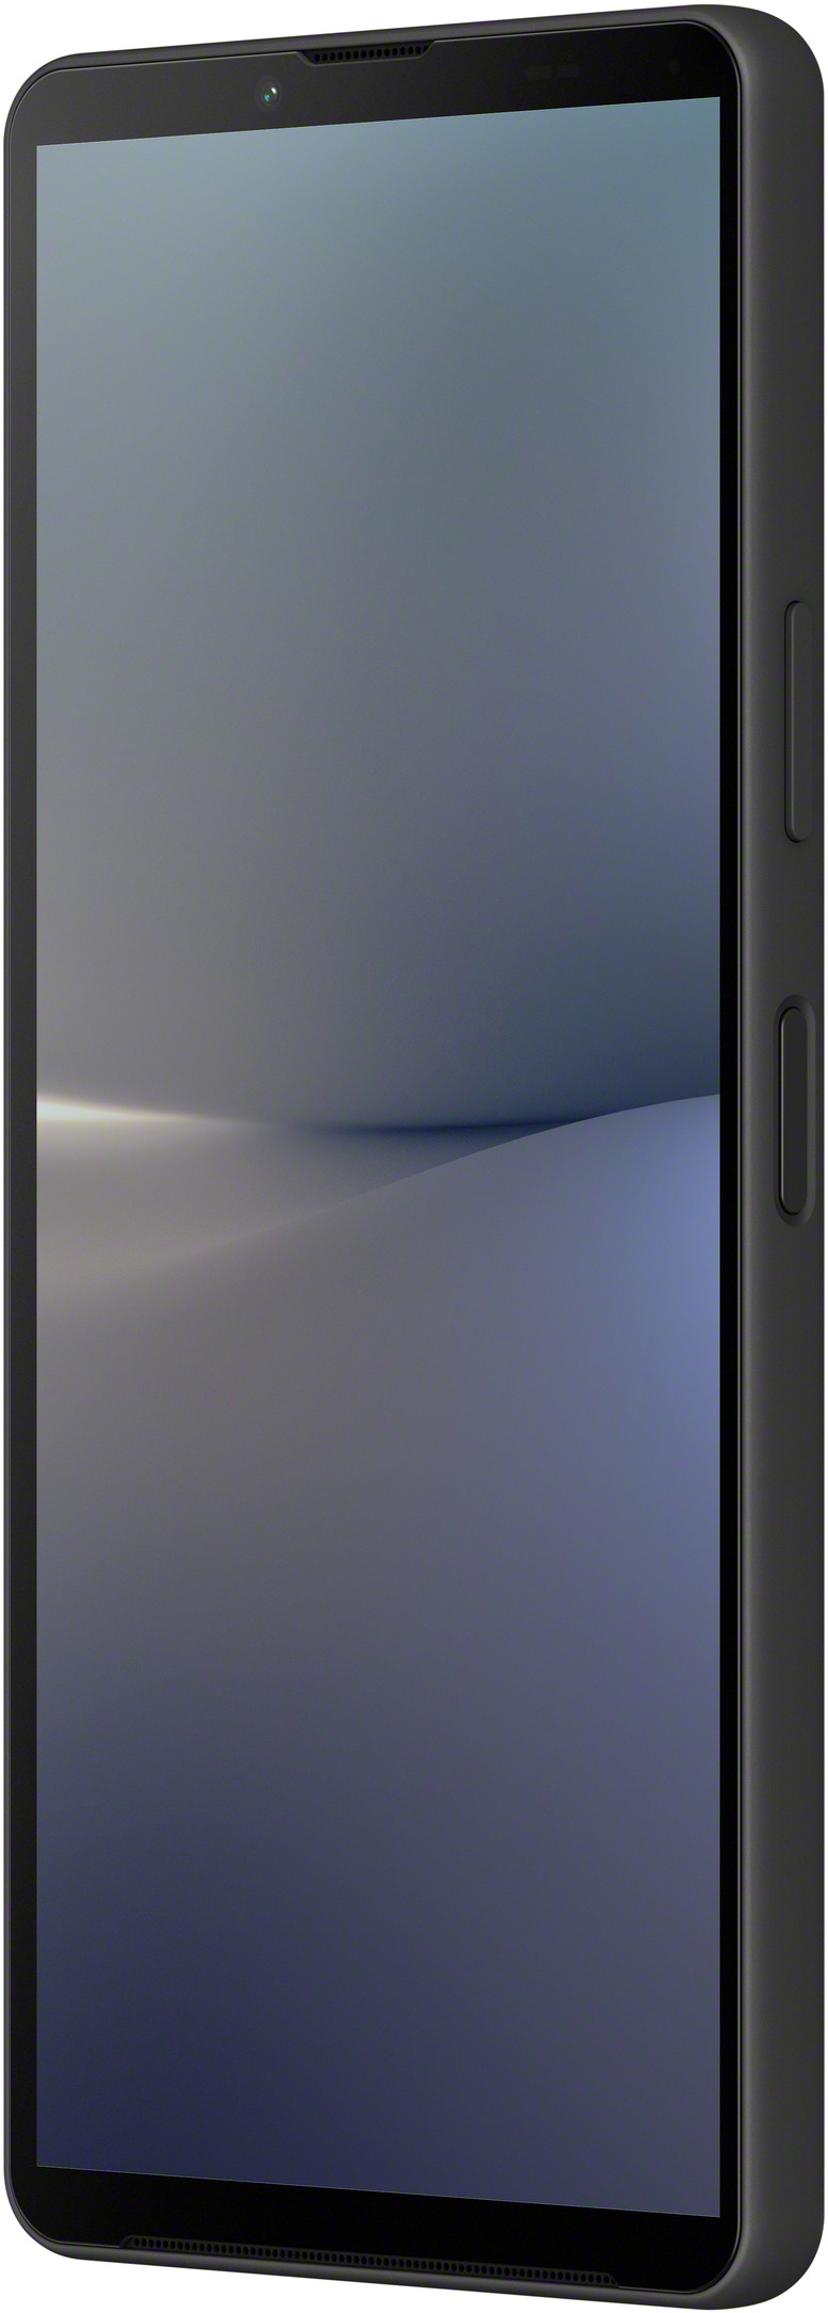 Sony XPERIA 10 V 128GB Musta